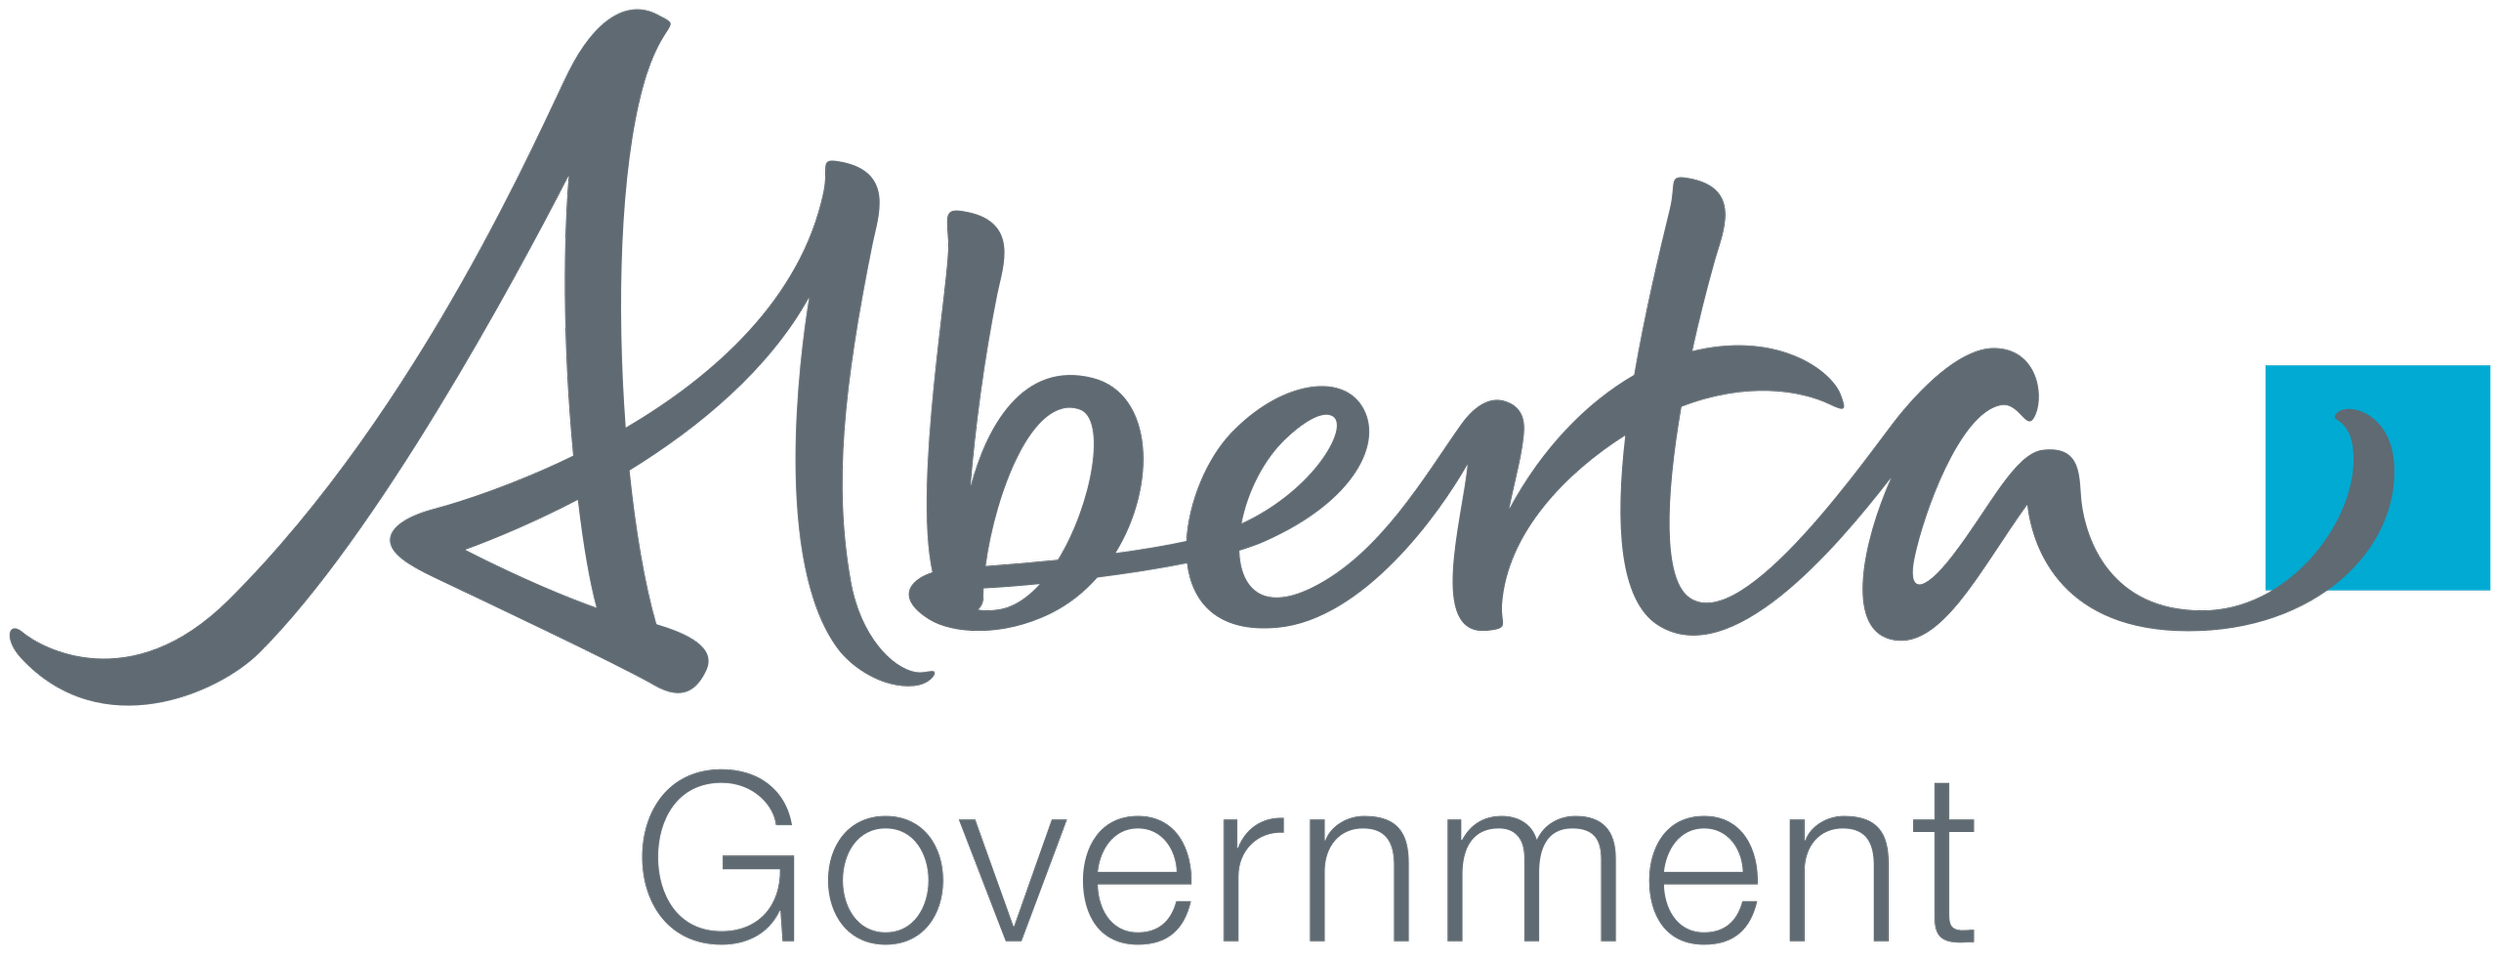 Alberta-government-logo2.svg.png